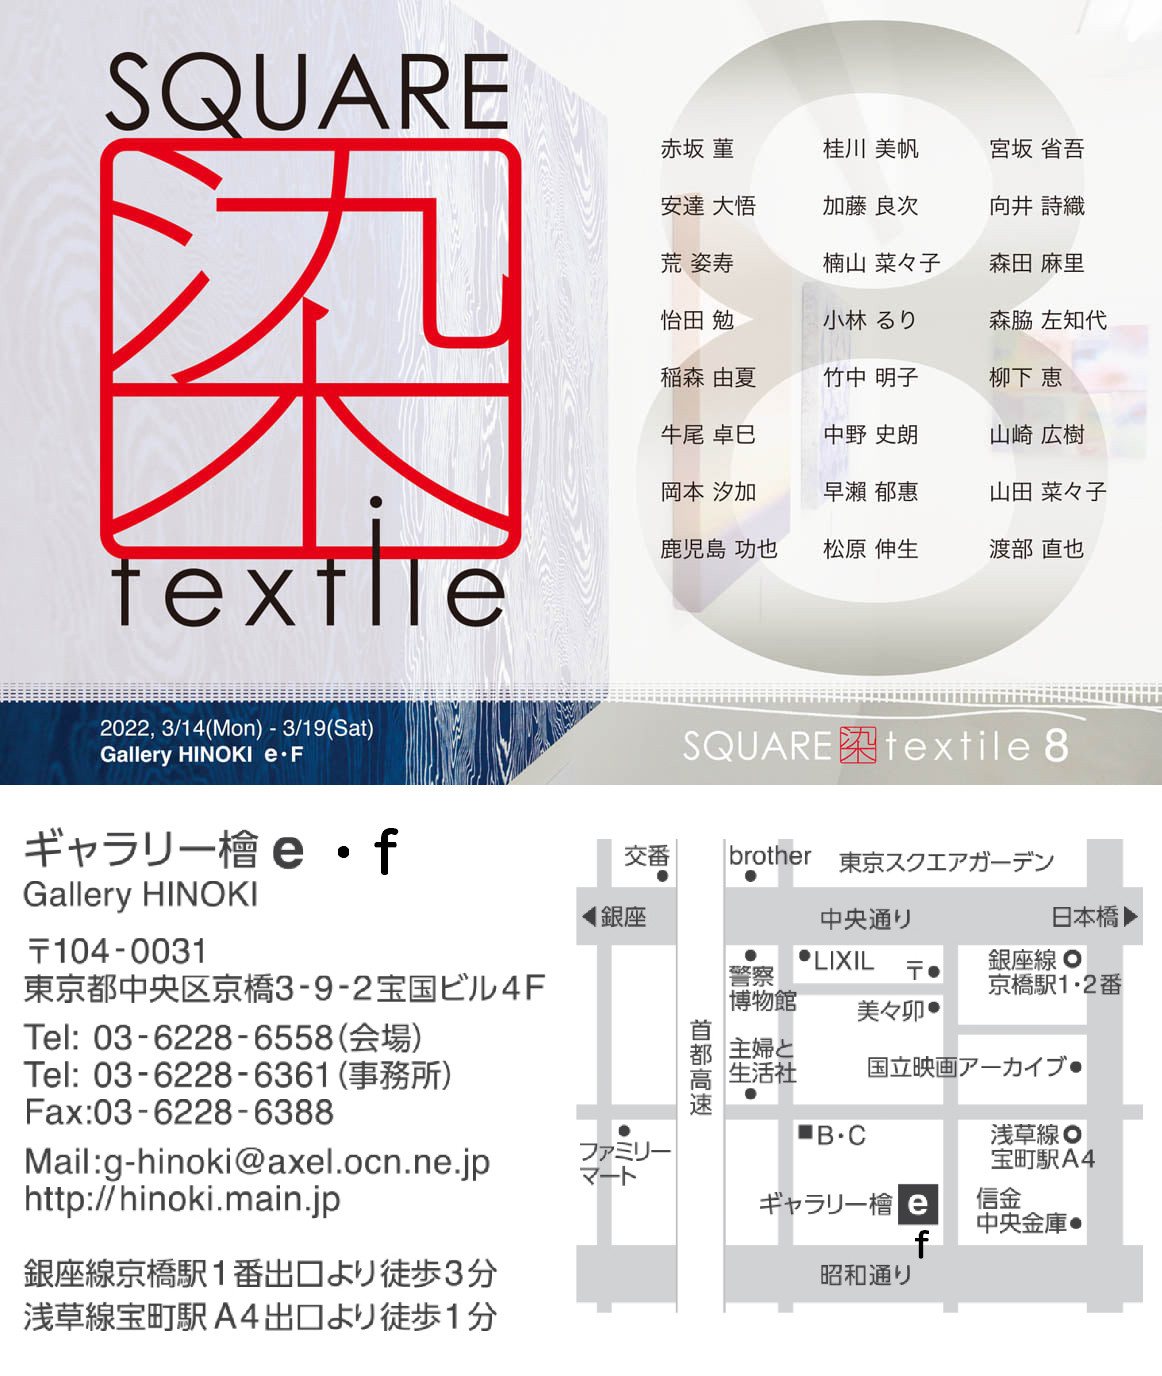 SQUARE 染 textile ８ 展に参加します！